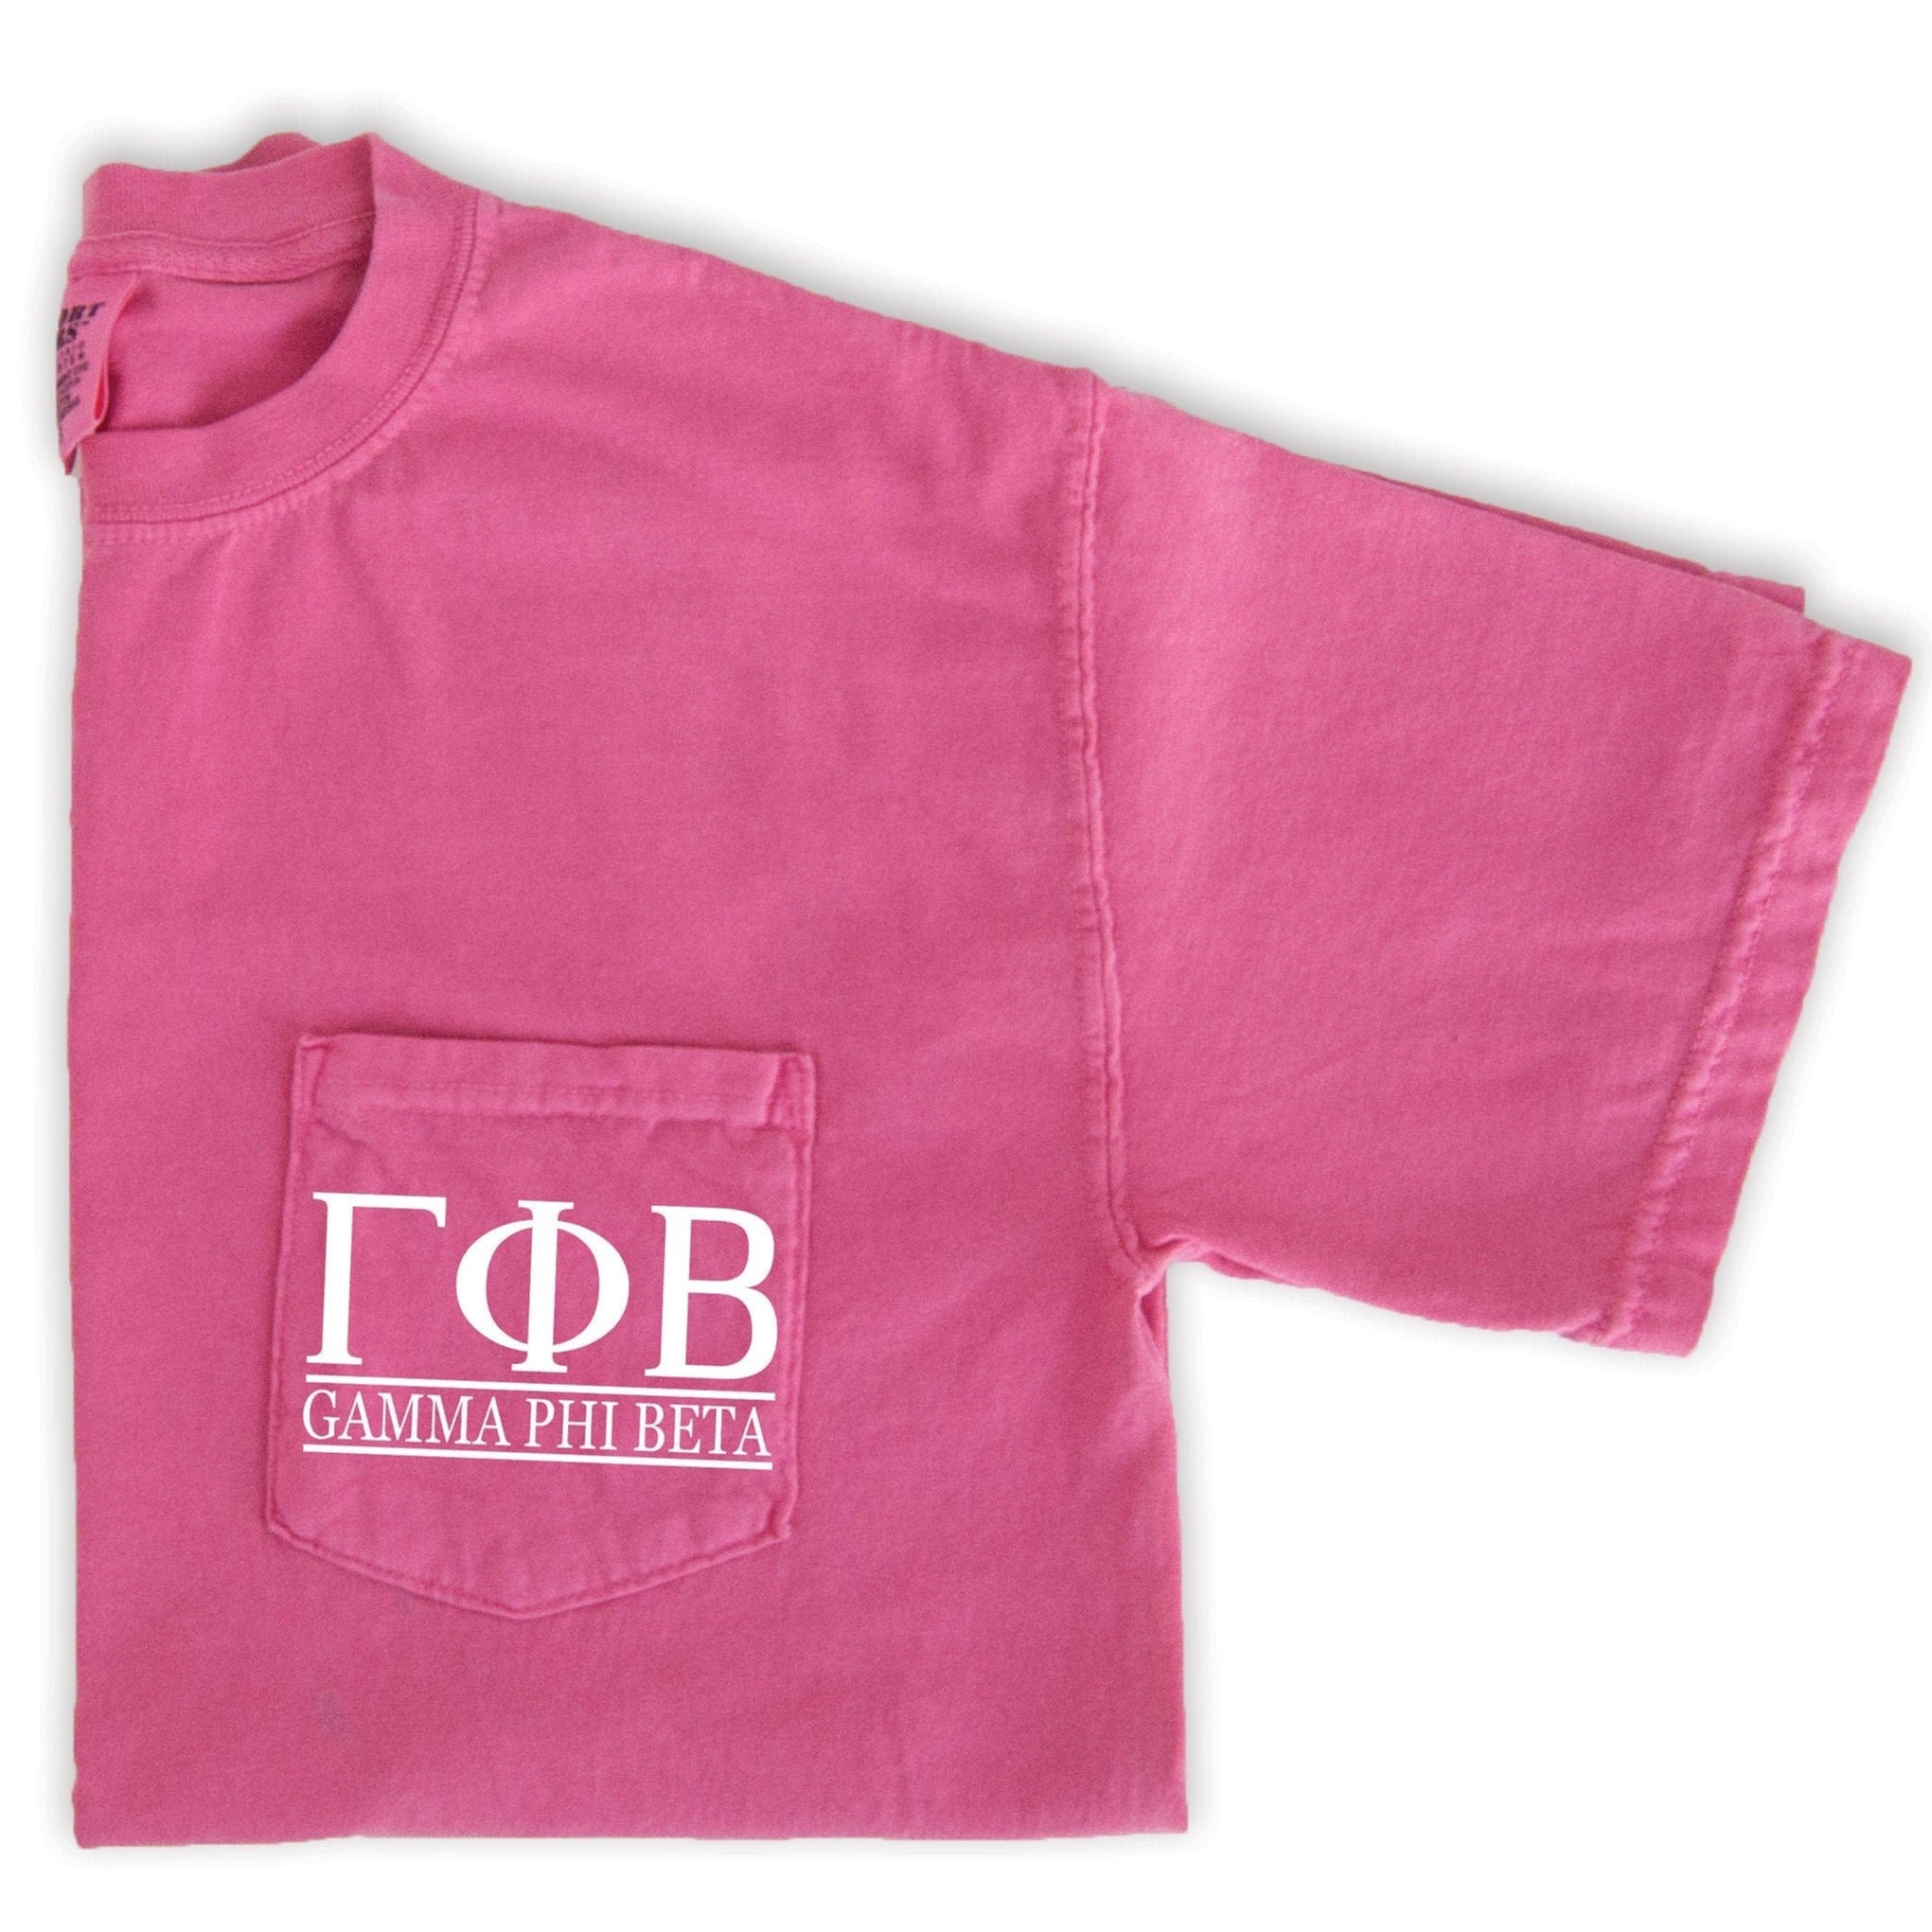 Gamma Phi Beta Block Letters T-shirt - Pink - Go Greek Chic